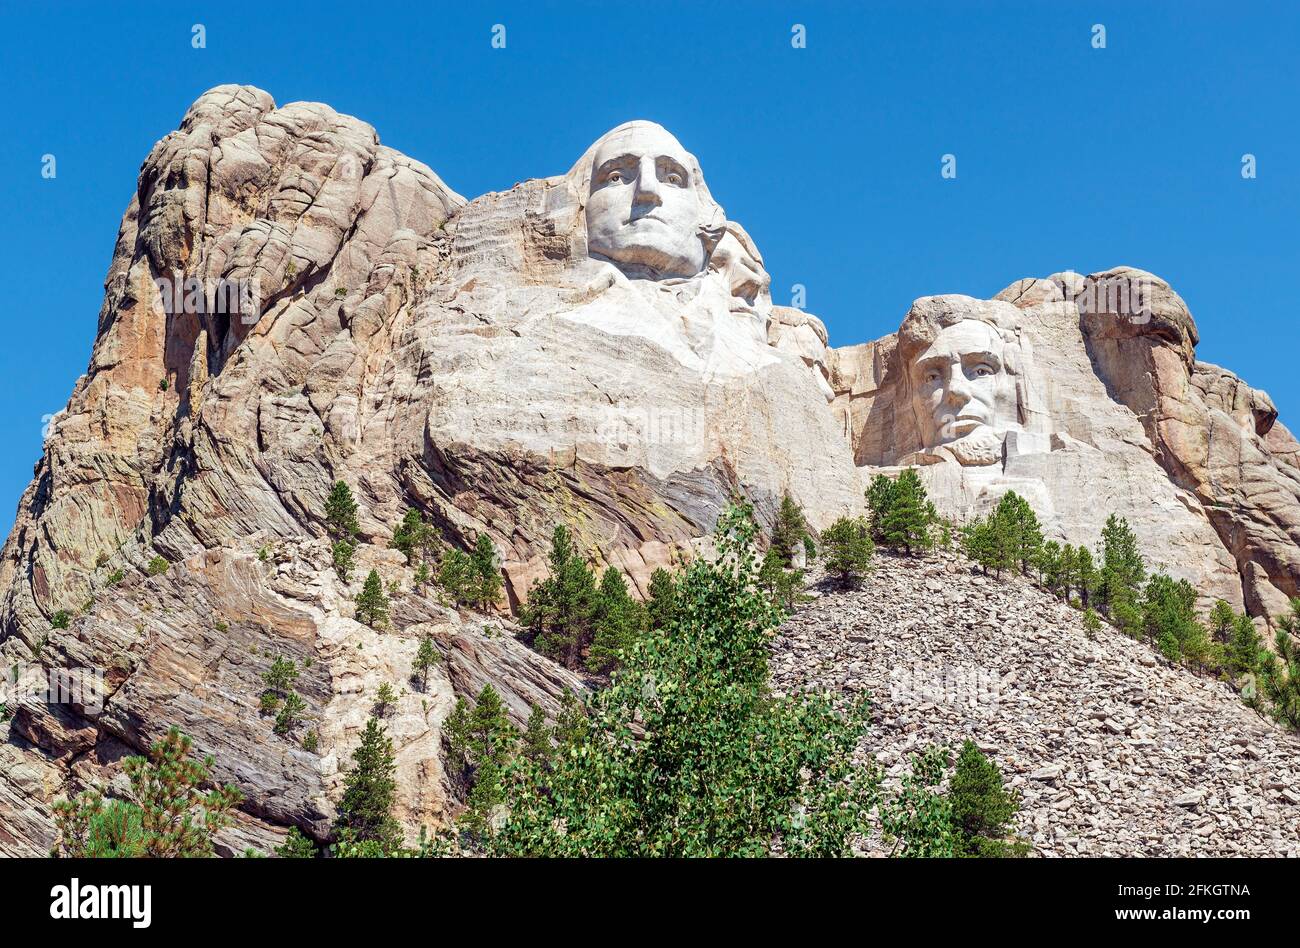 Mount Rushmore Nationaldenkmal mit amerikanischen Präsidenten, South Dakota, Vereinigte Staaten von Amerika, USA. Stockfoto